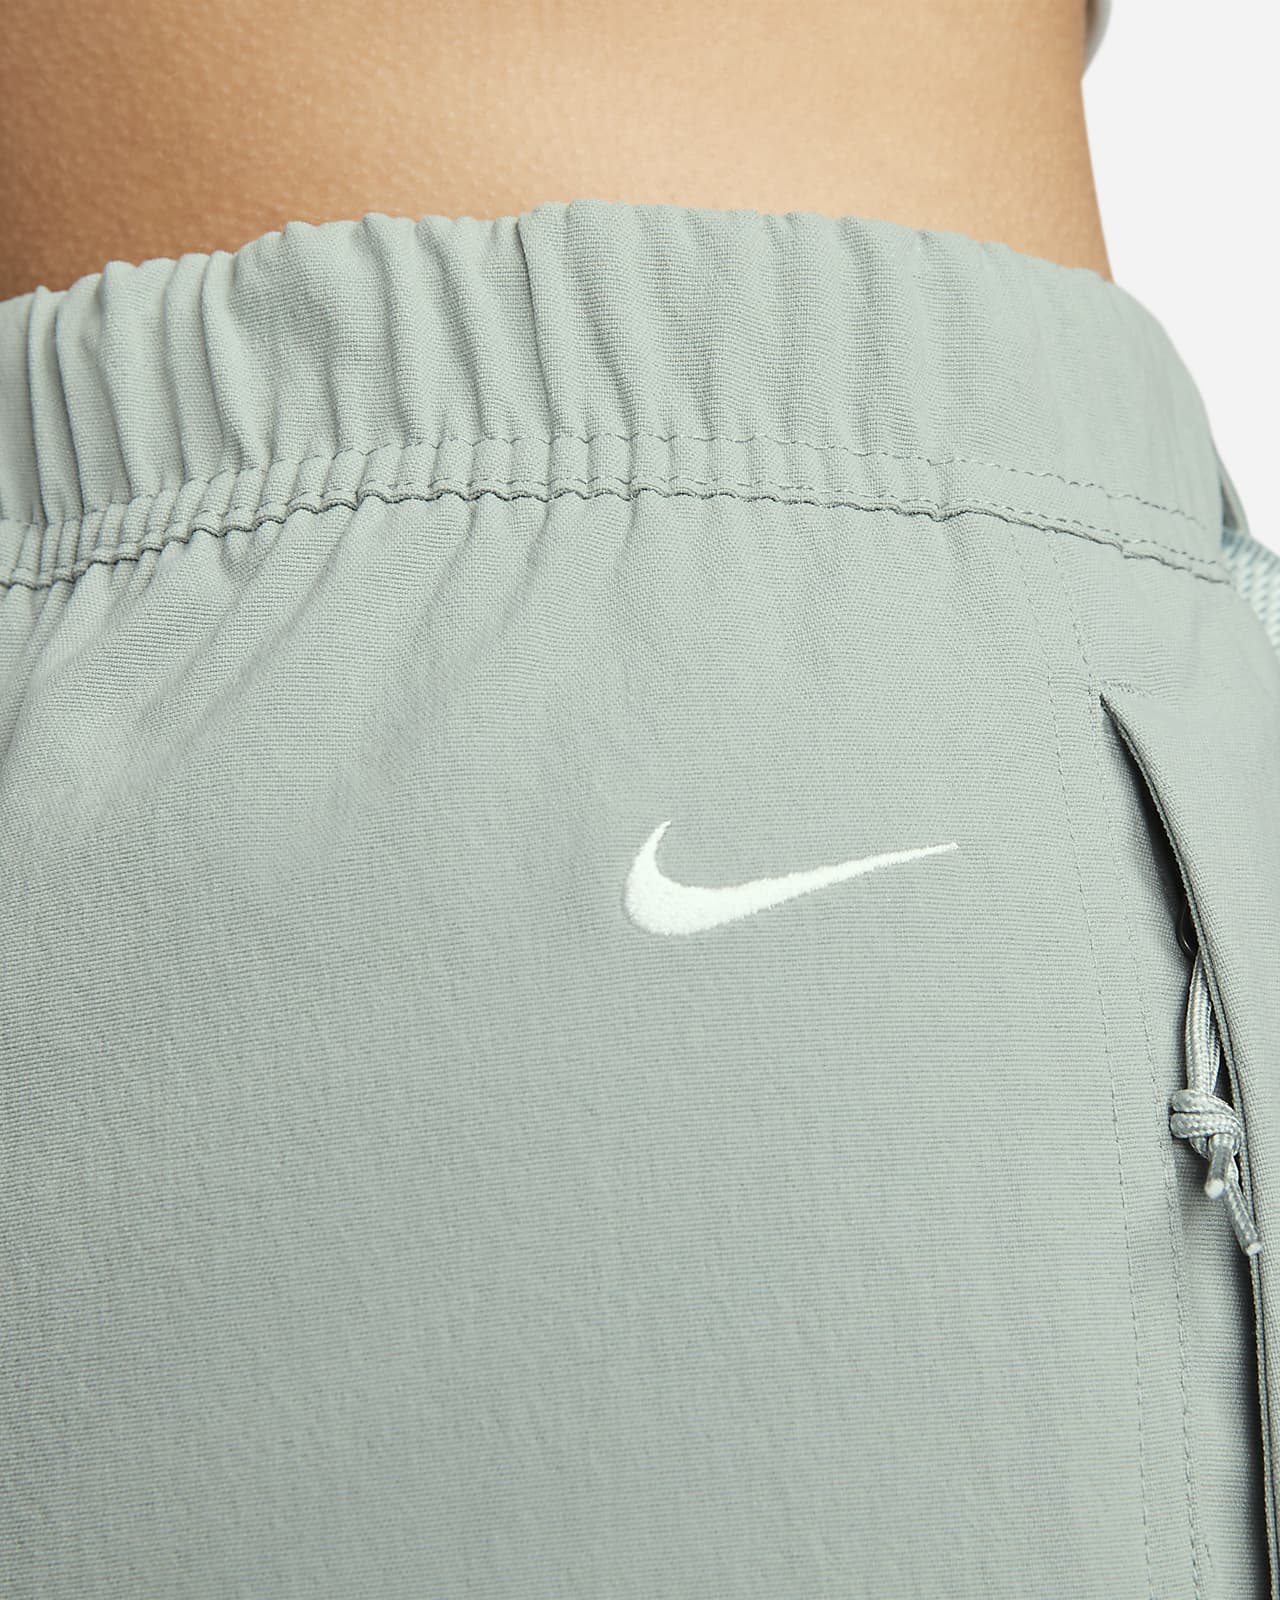 Nike Women's Swift Running Pants